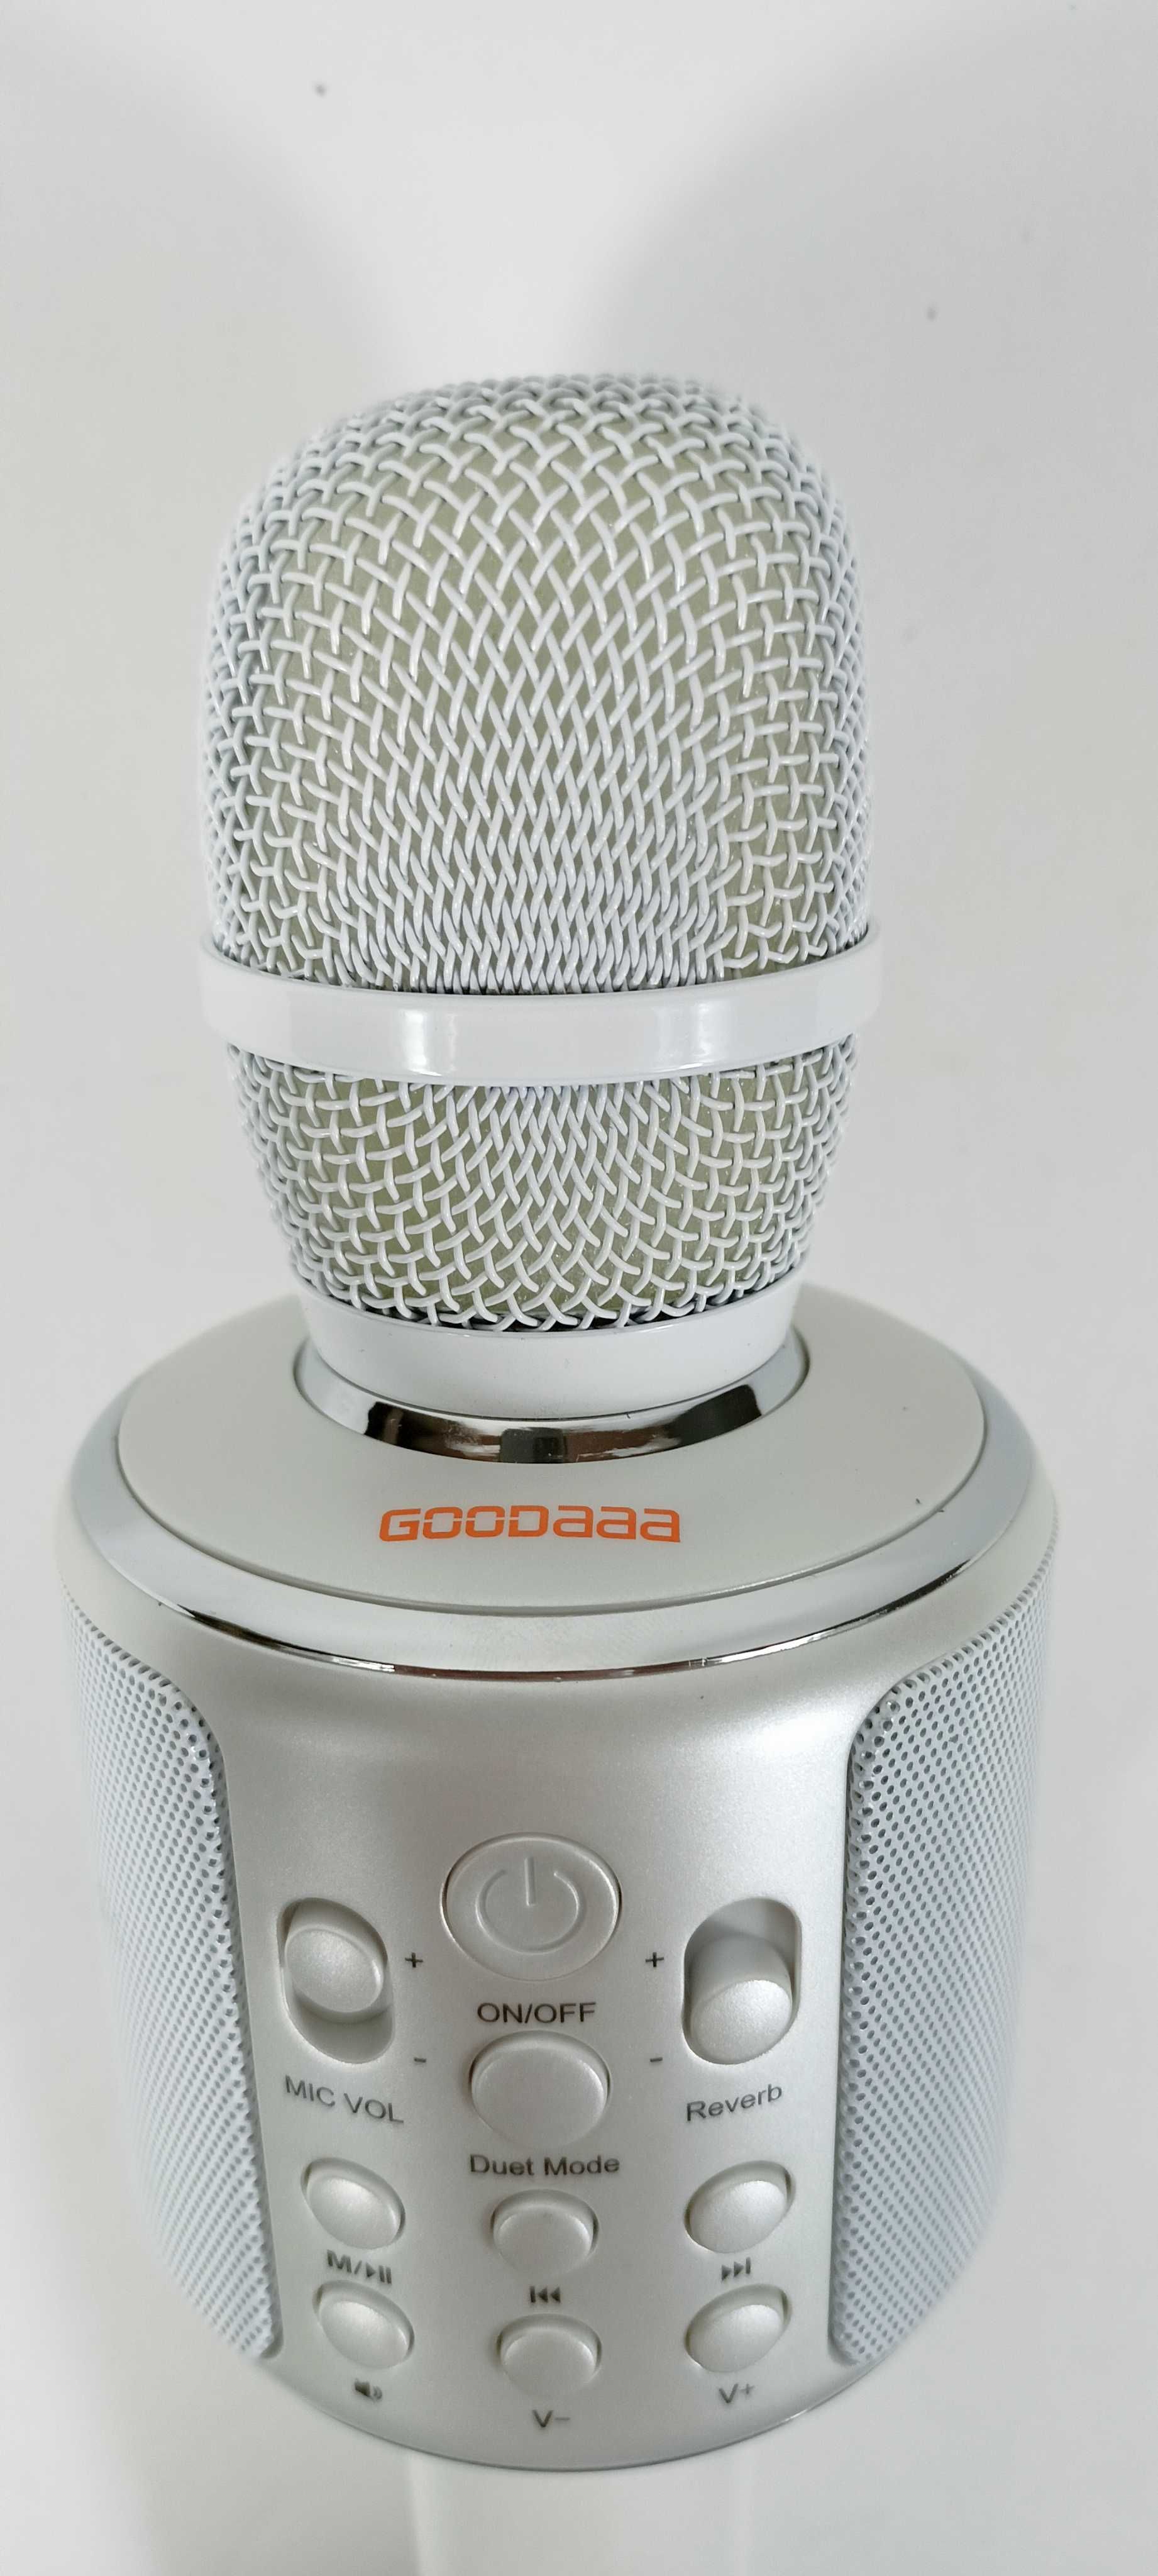 GOODaaa przenośny mikrofon karaoke Bluetooth 4w1